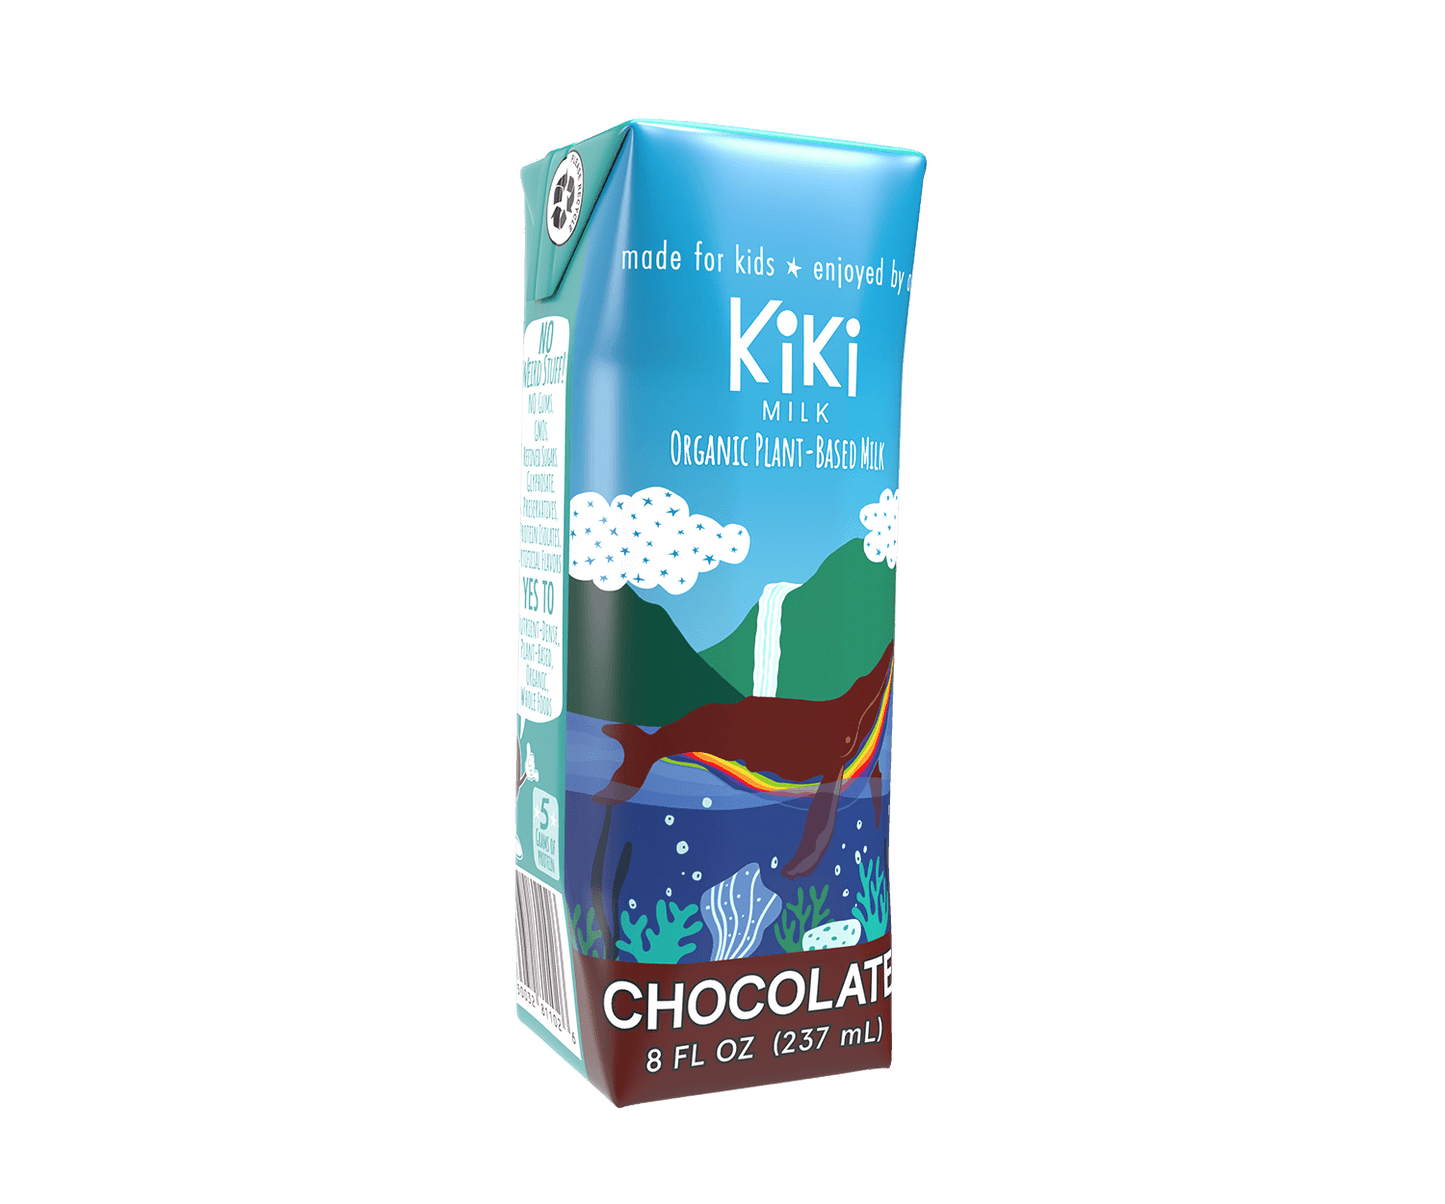 Chocolate Kiki Milk - 8 fl oz - Pack of 12 by Kiki Milk